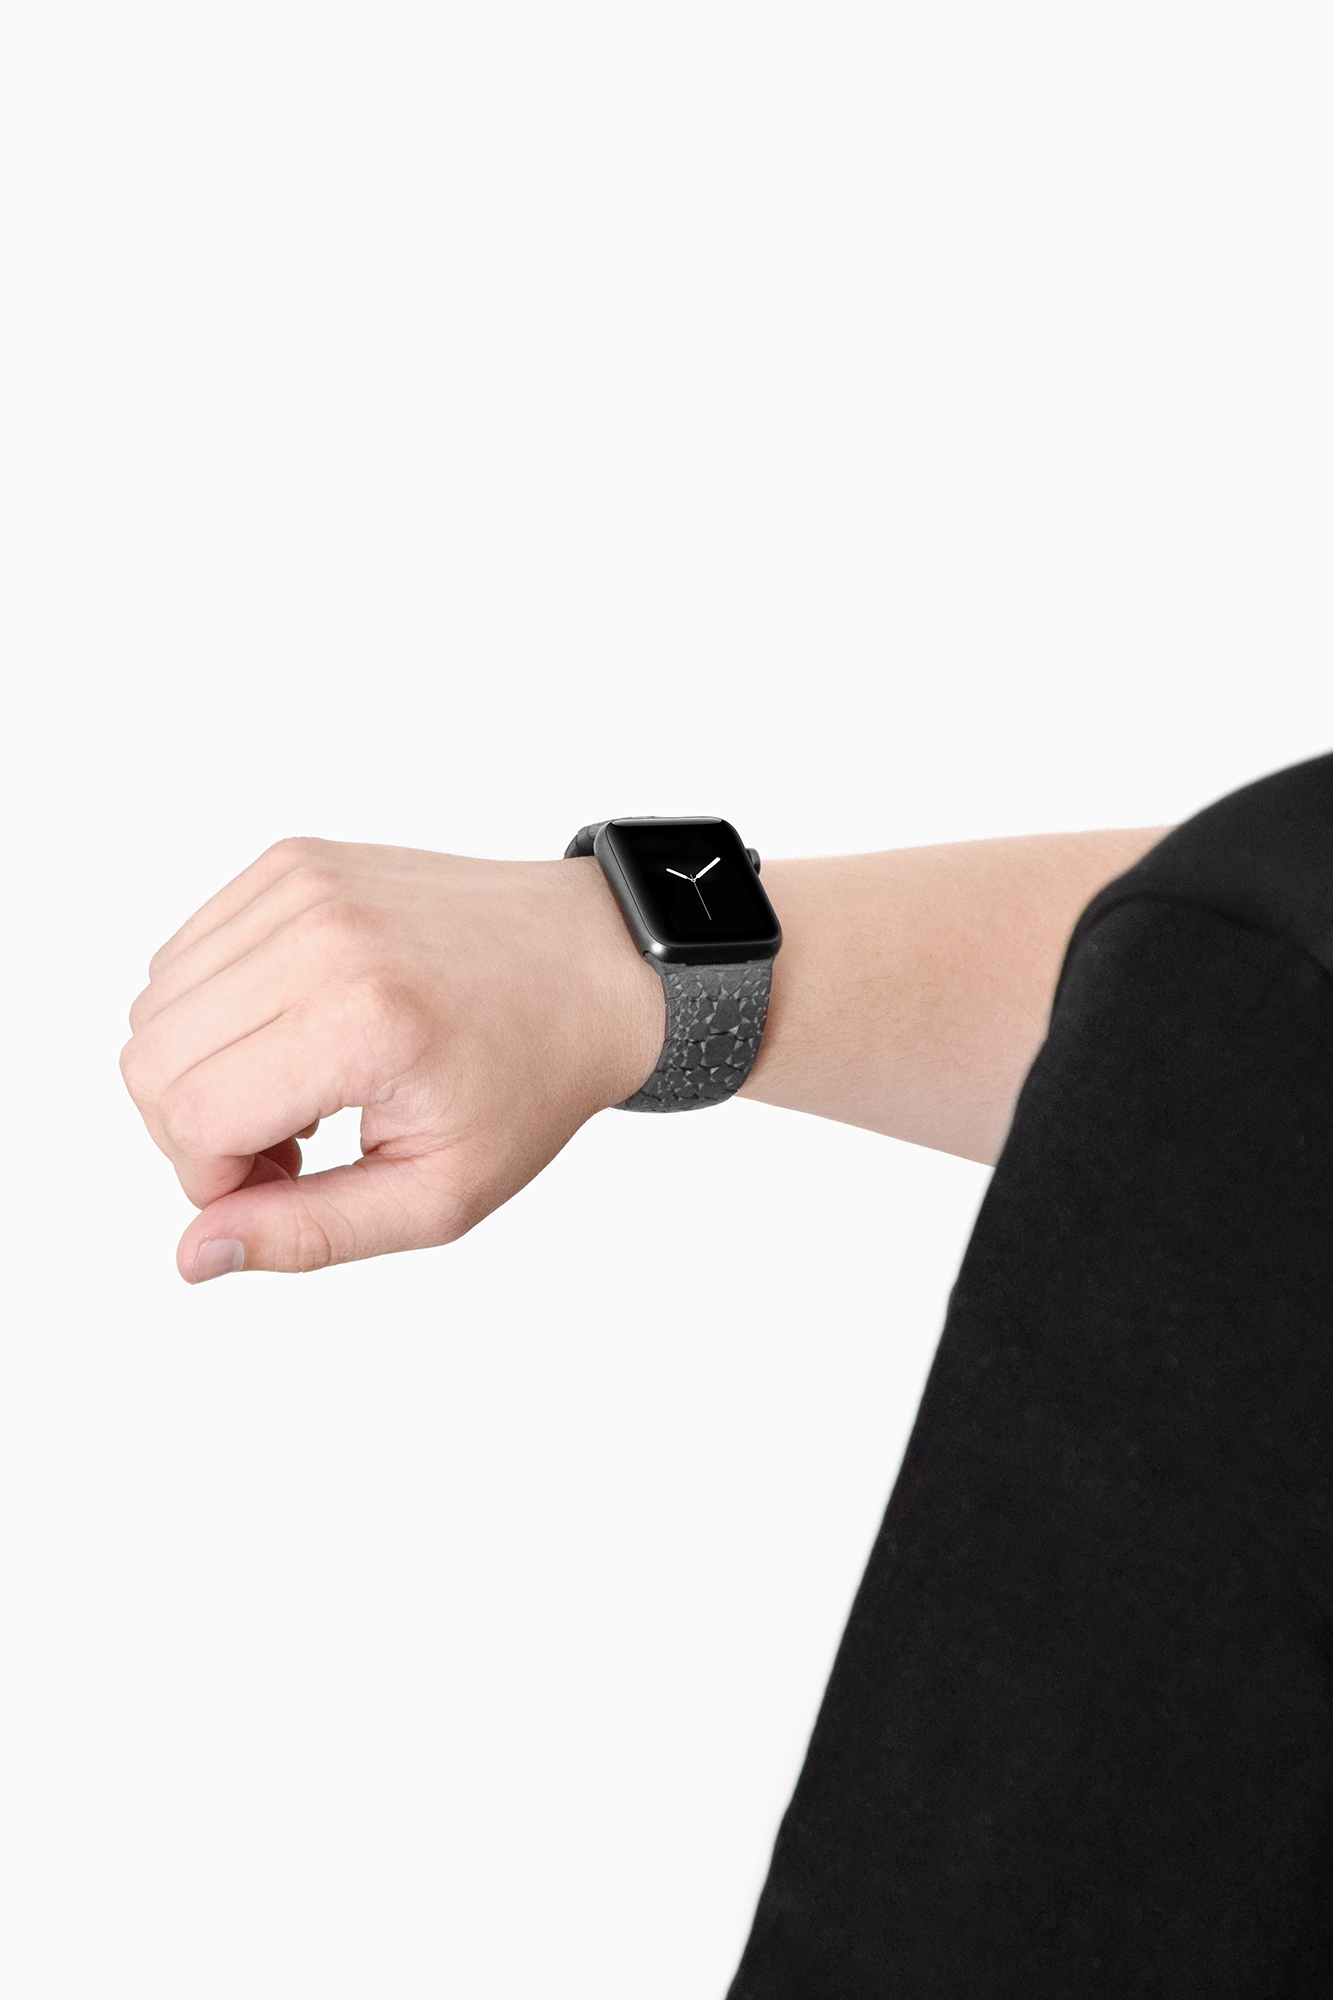 Obsidian Apple Watch Band, Design by Matthijs Kok for Freshfiber